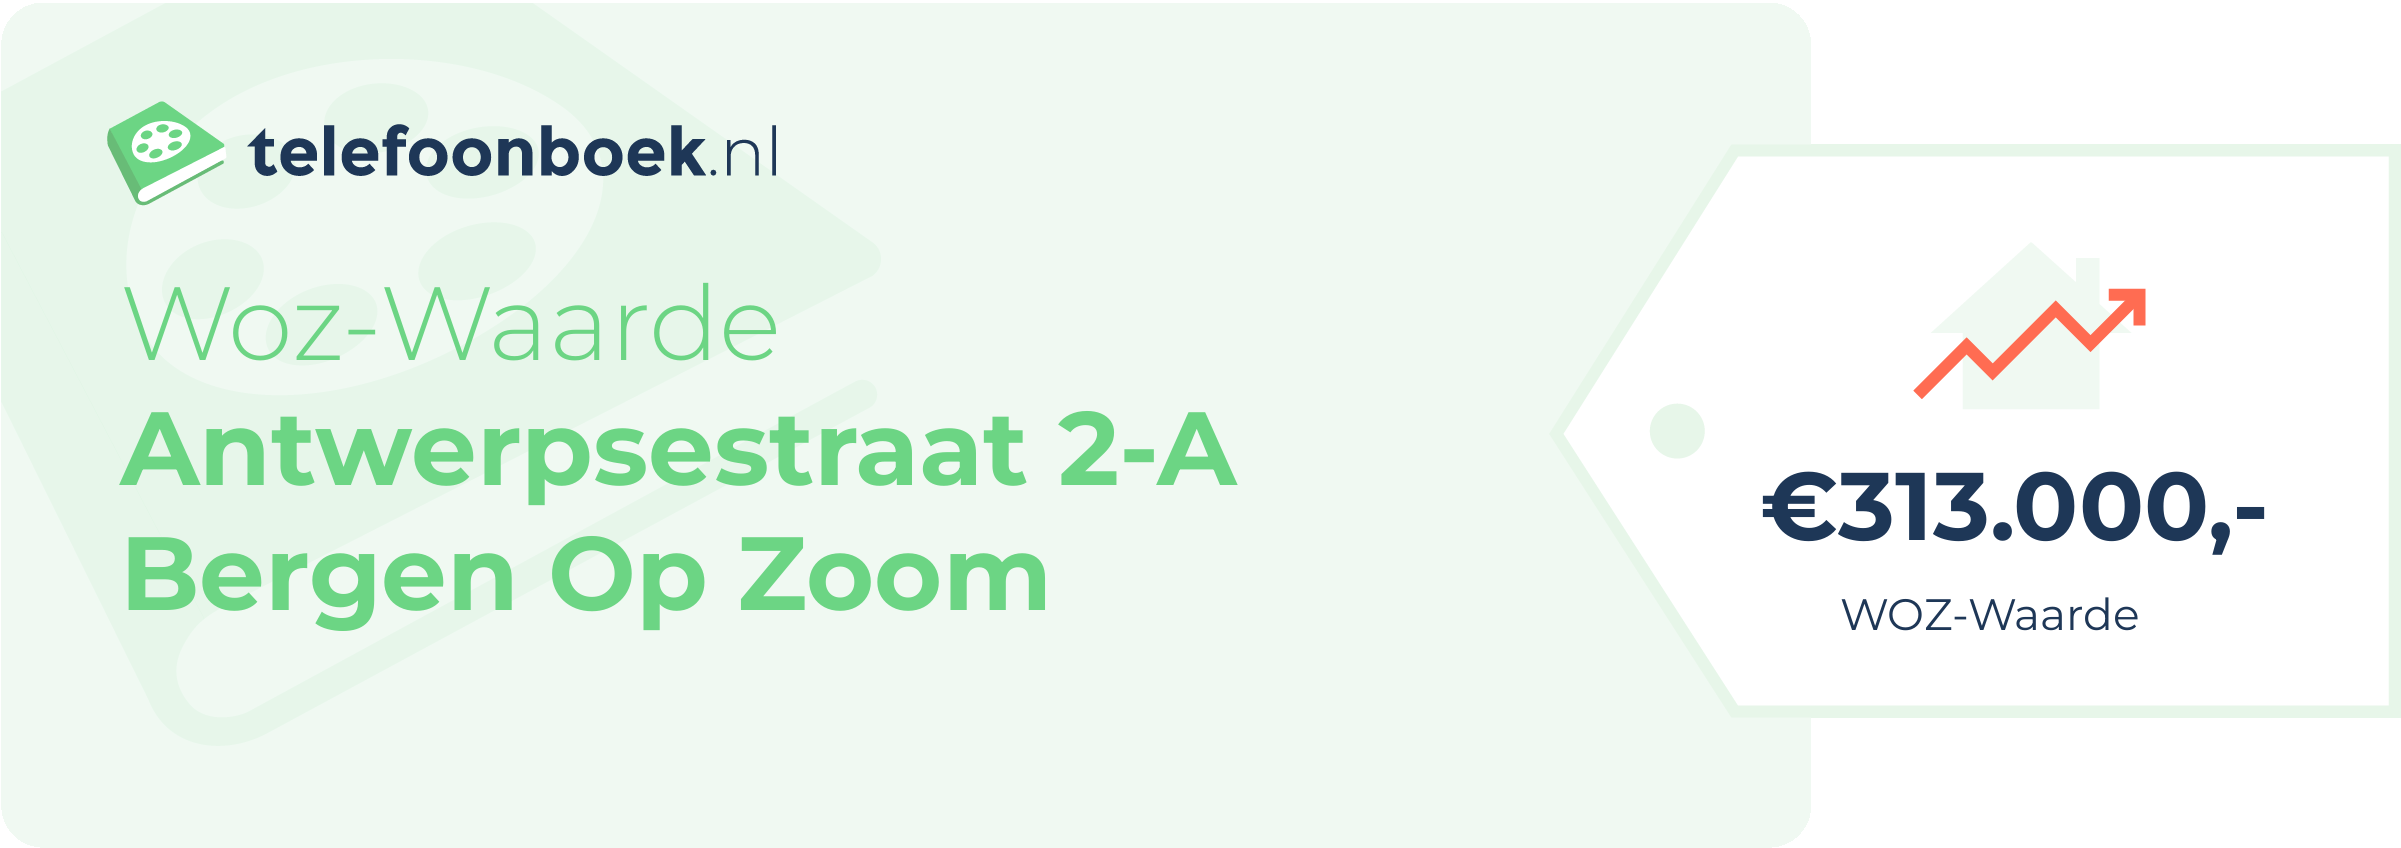 WOZ-waarde Antwerpsestraat 2-A Bergen Op Zoom